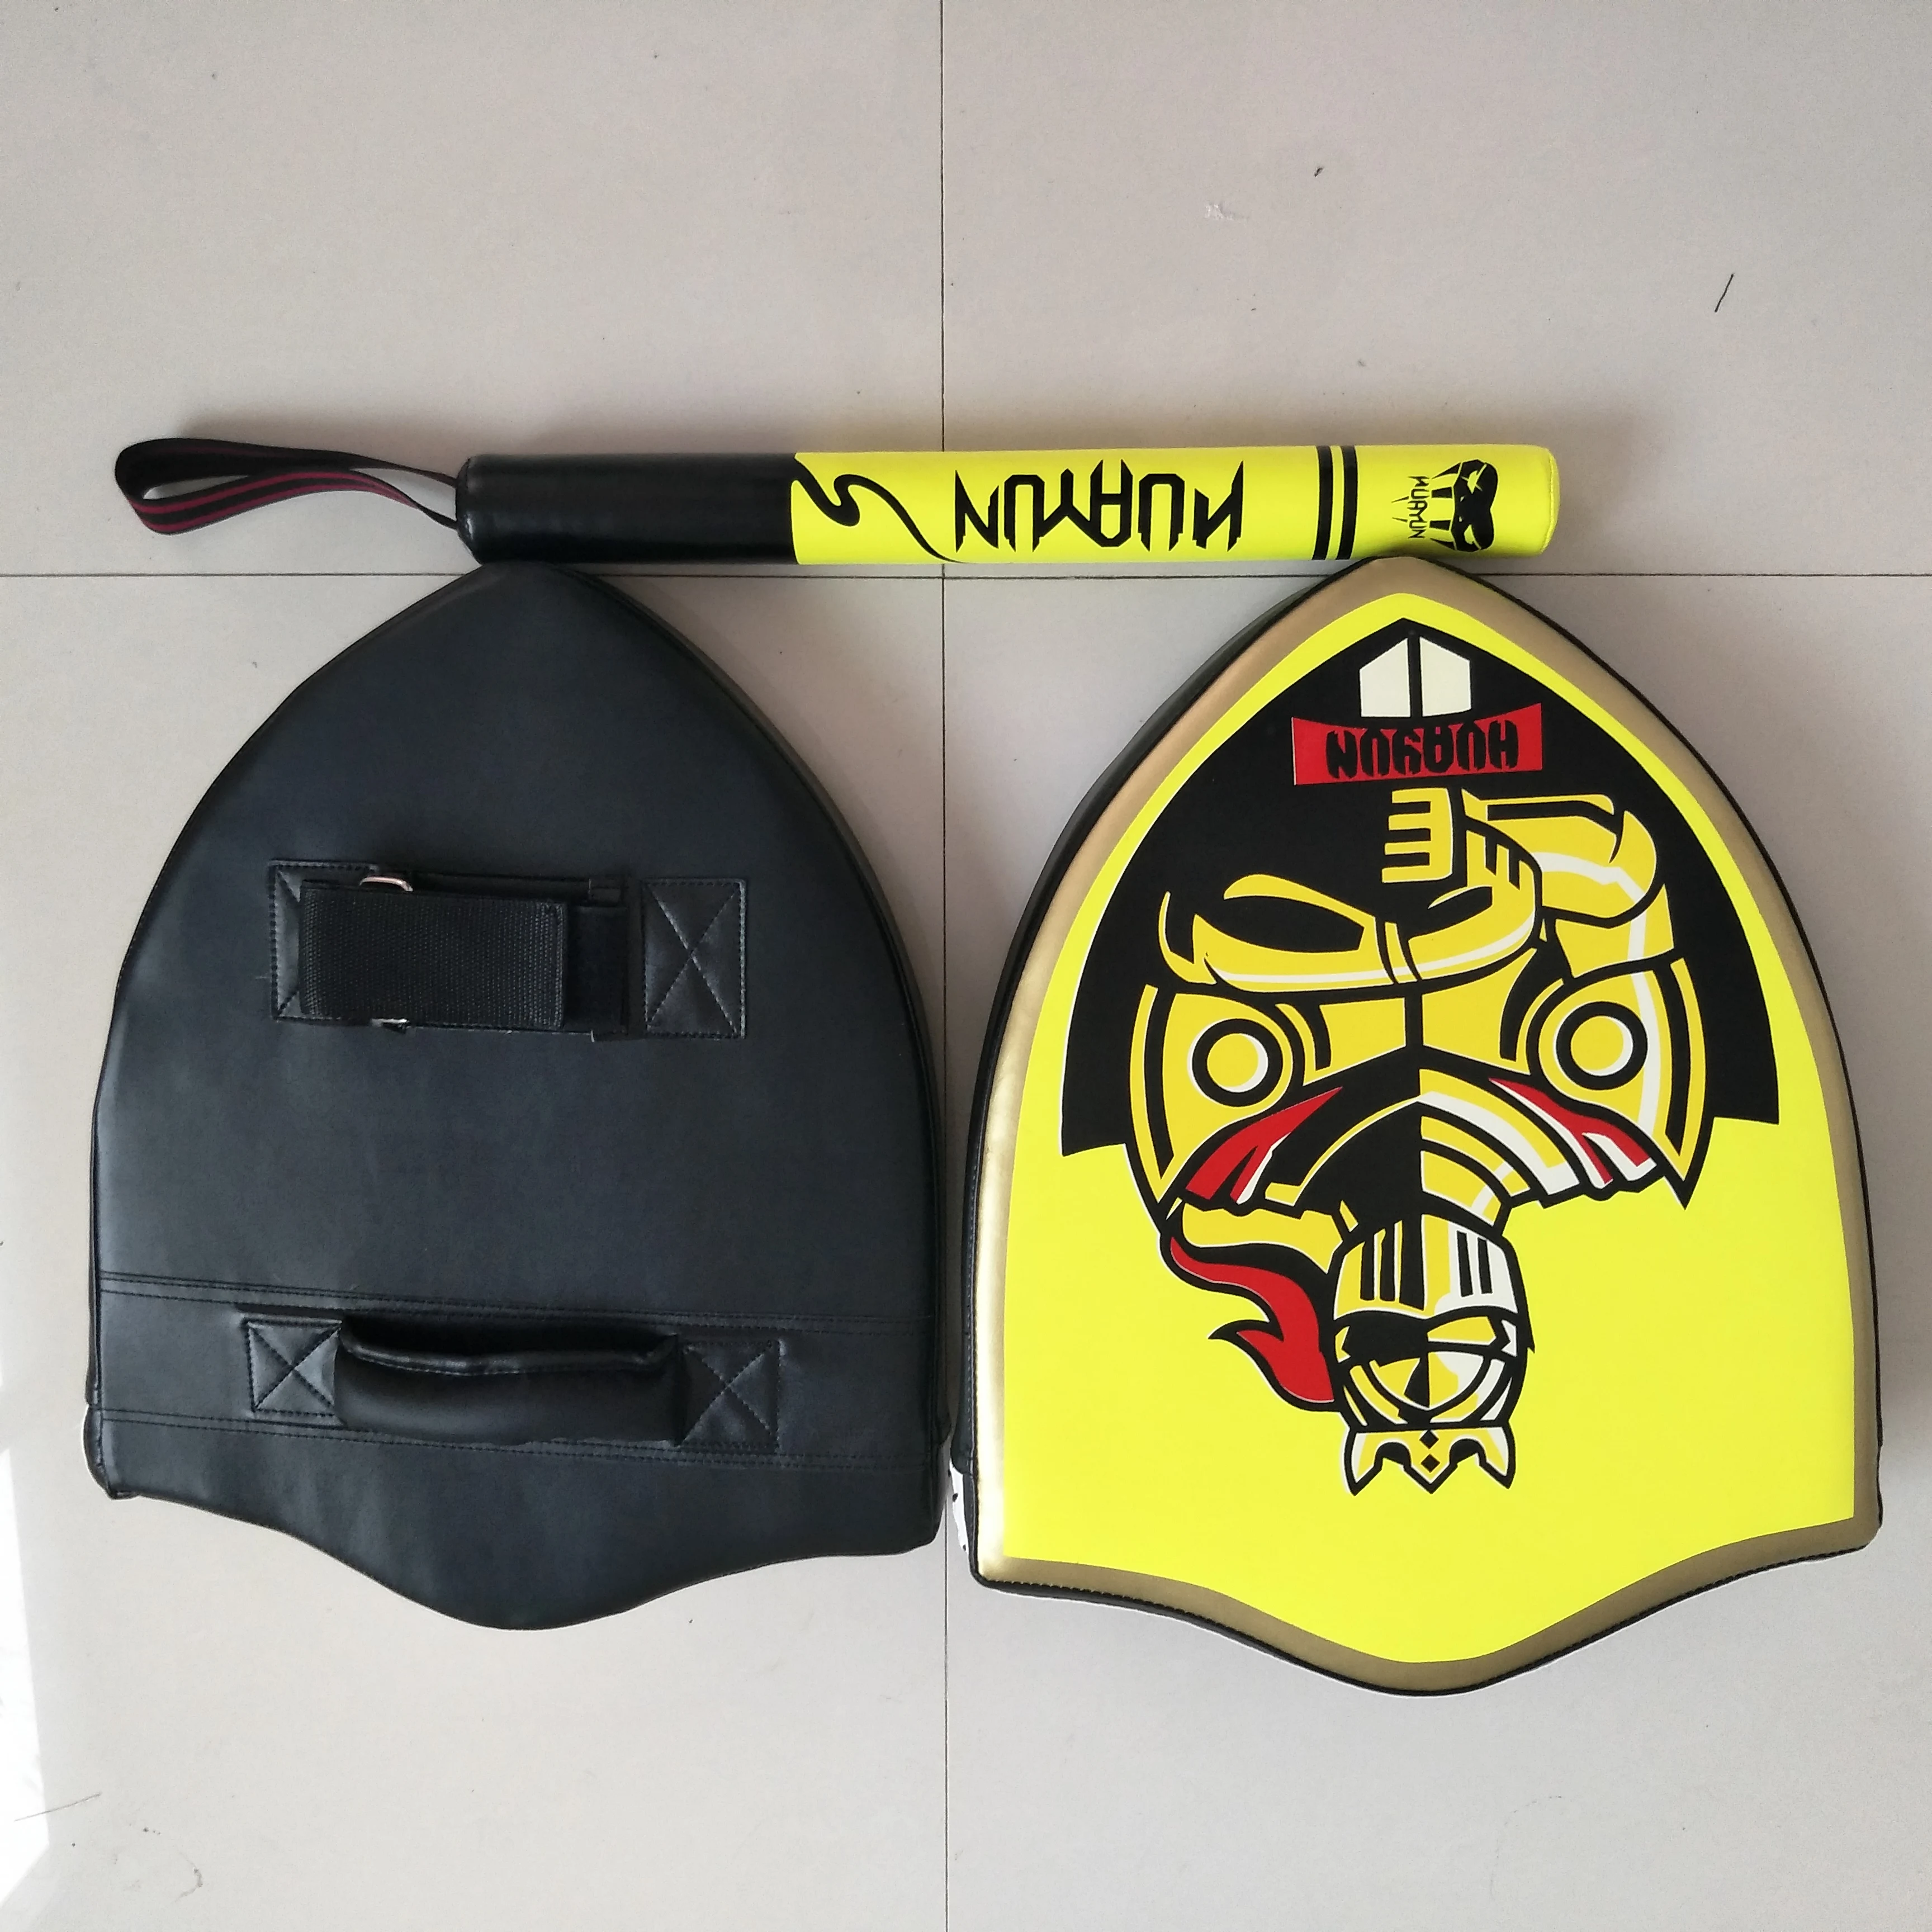 
Hot sale custom design big martial arts shield for training 